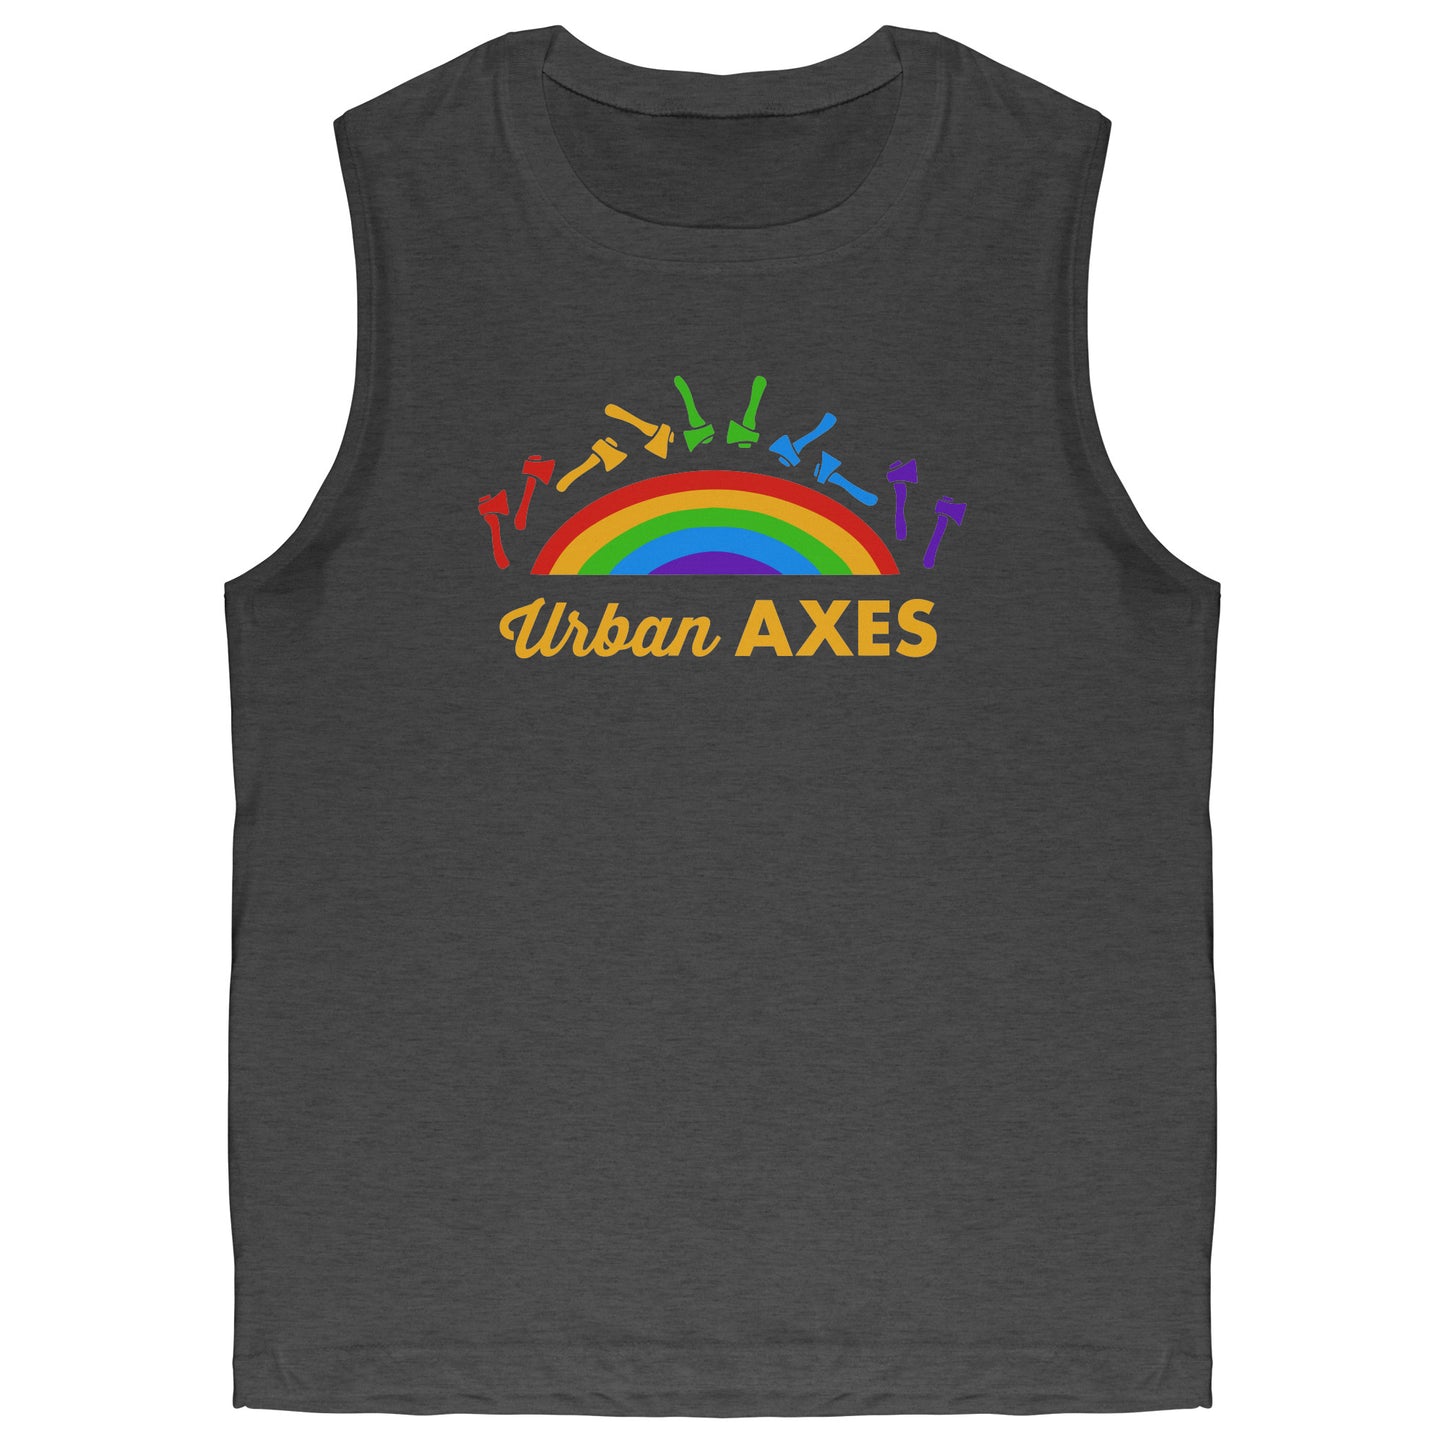 Urban Axes Rainbow Pride Muscle Shirt - Canvas Unisex Shirt